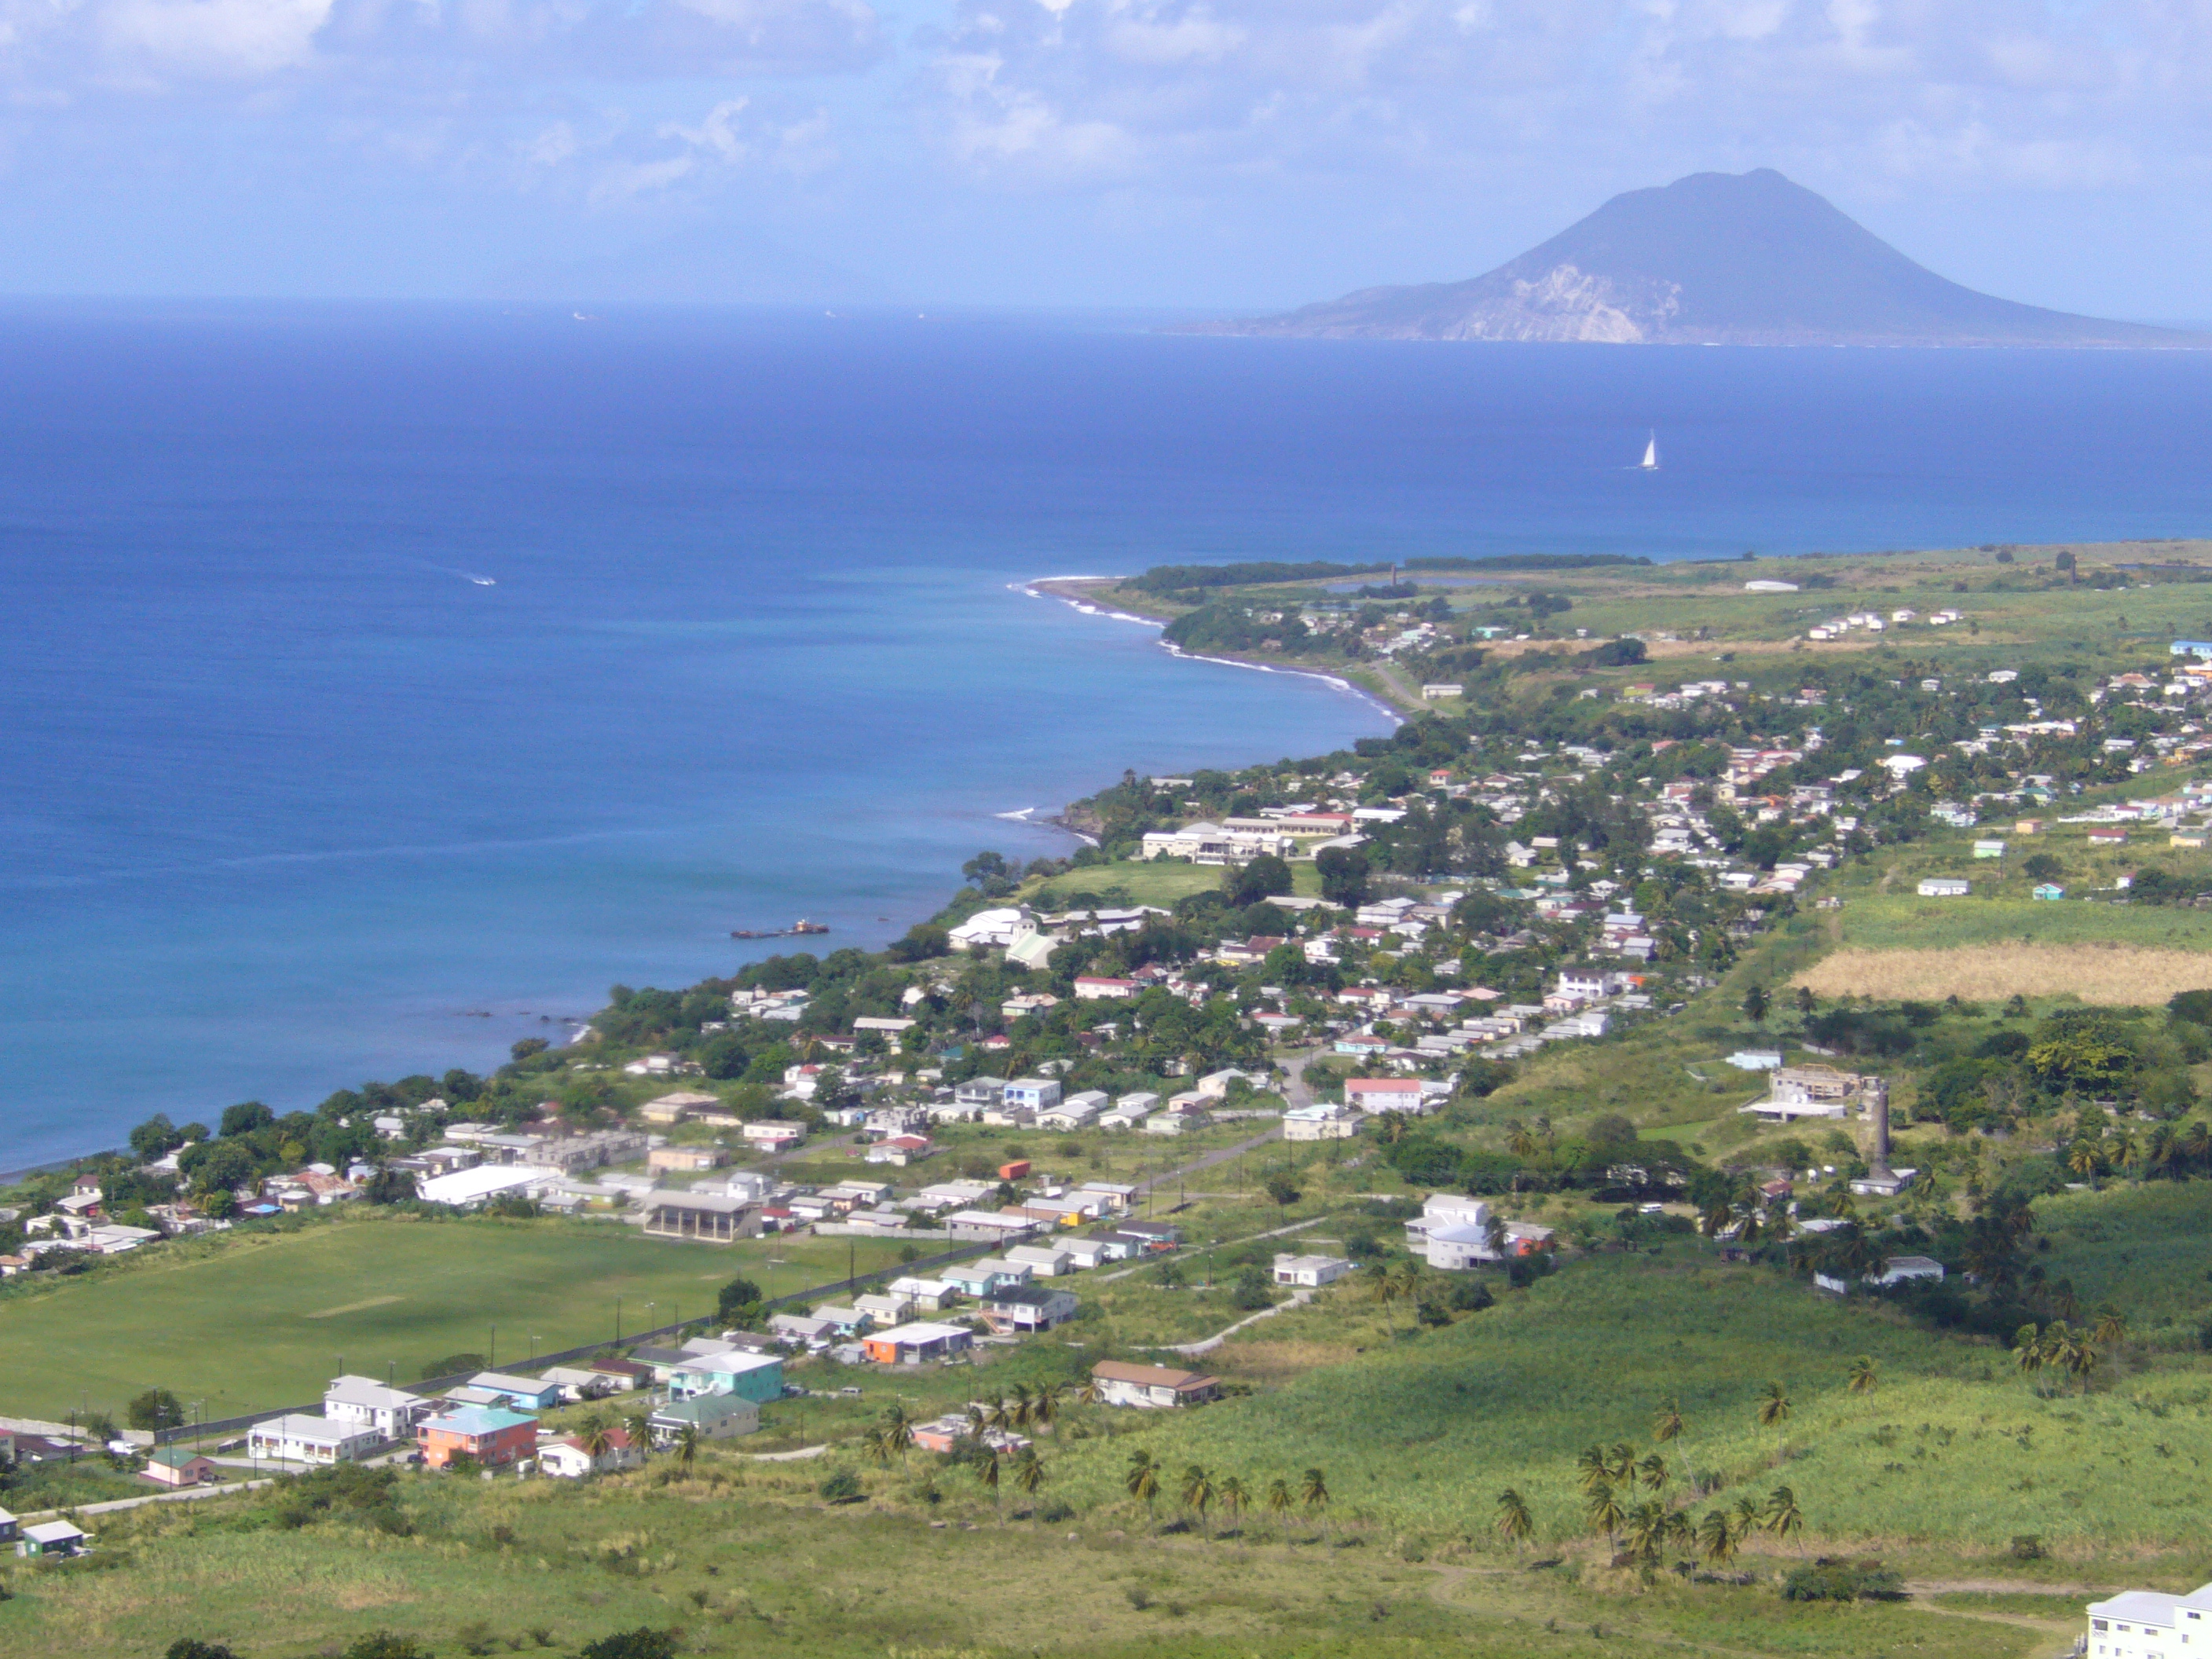 St Eustatius viewed from St Kitts